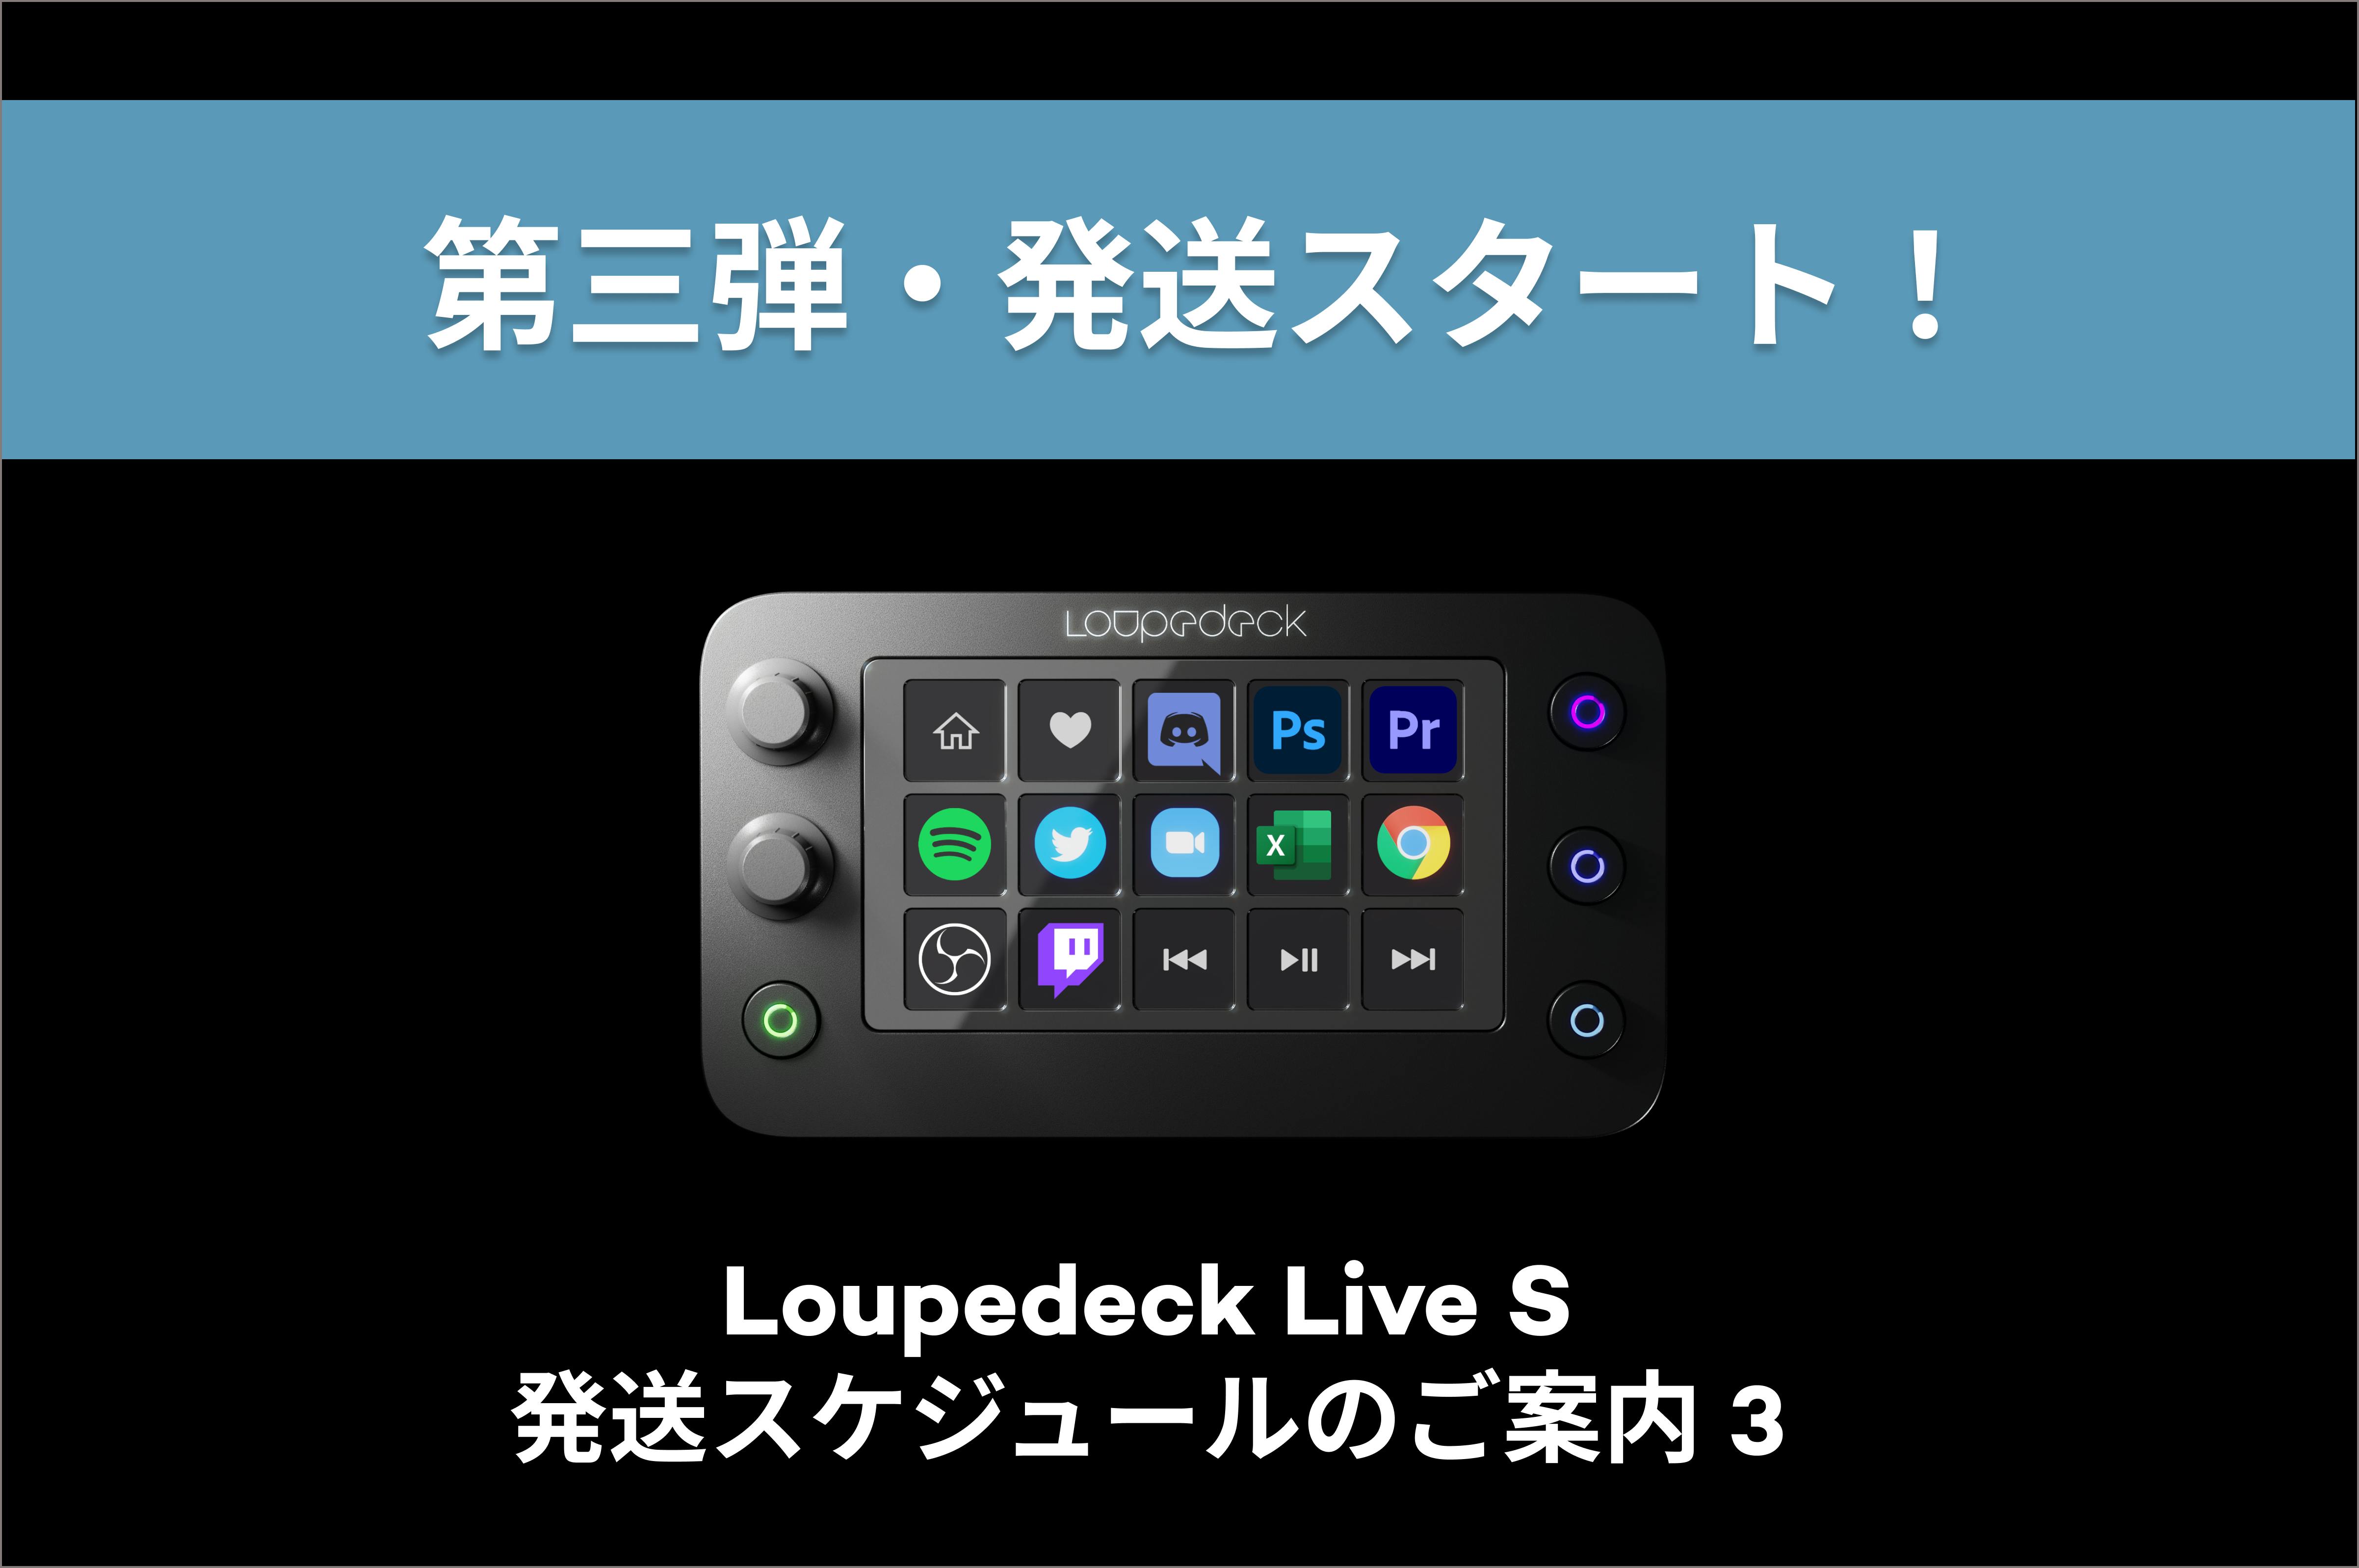 Loupedeck Live S: あらゆるPC作業を効率化する究極のデバイス ...